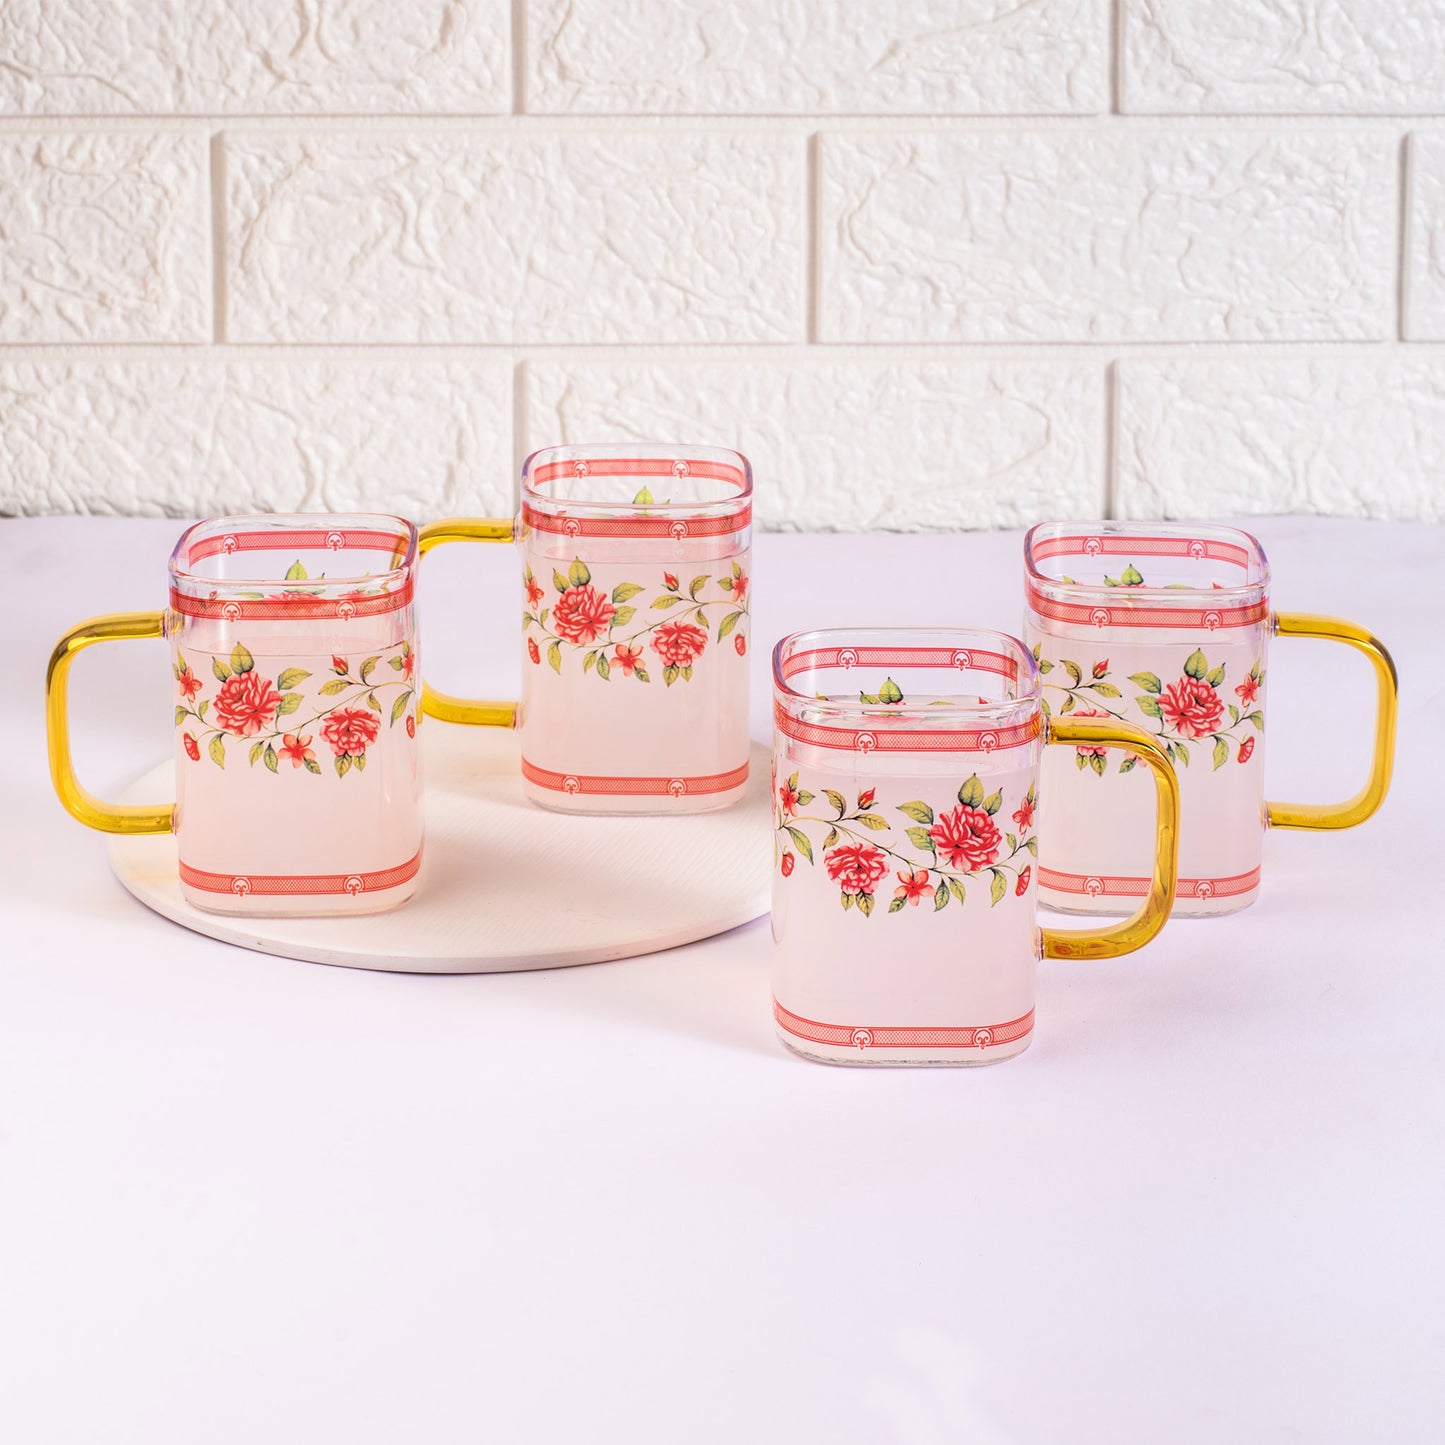 Shrub Roses Square Coffee/Tea mugs - Set of 2 and 4